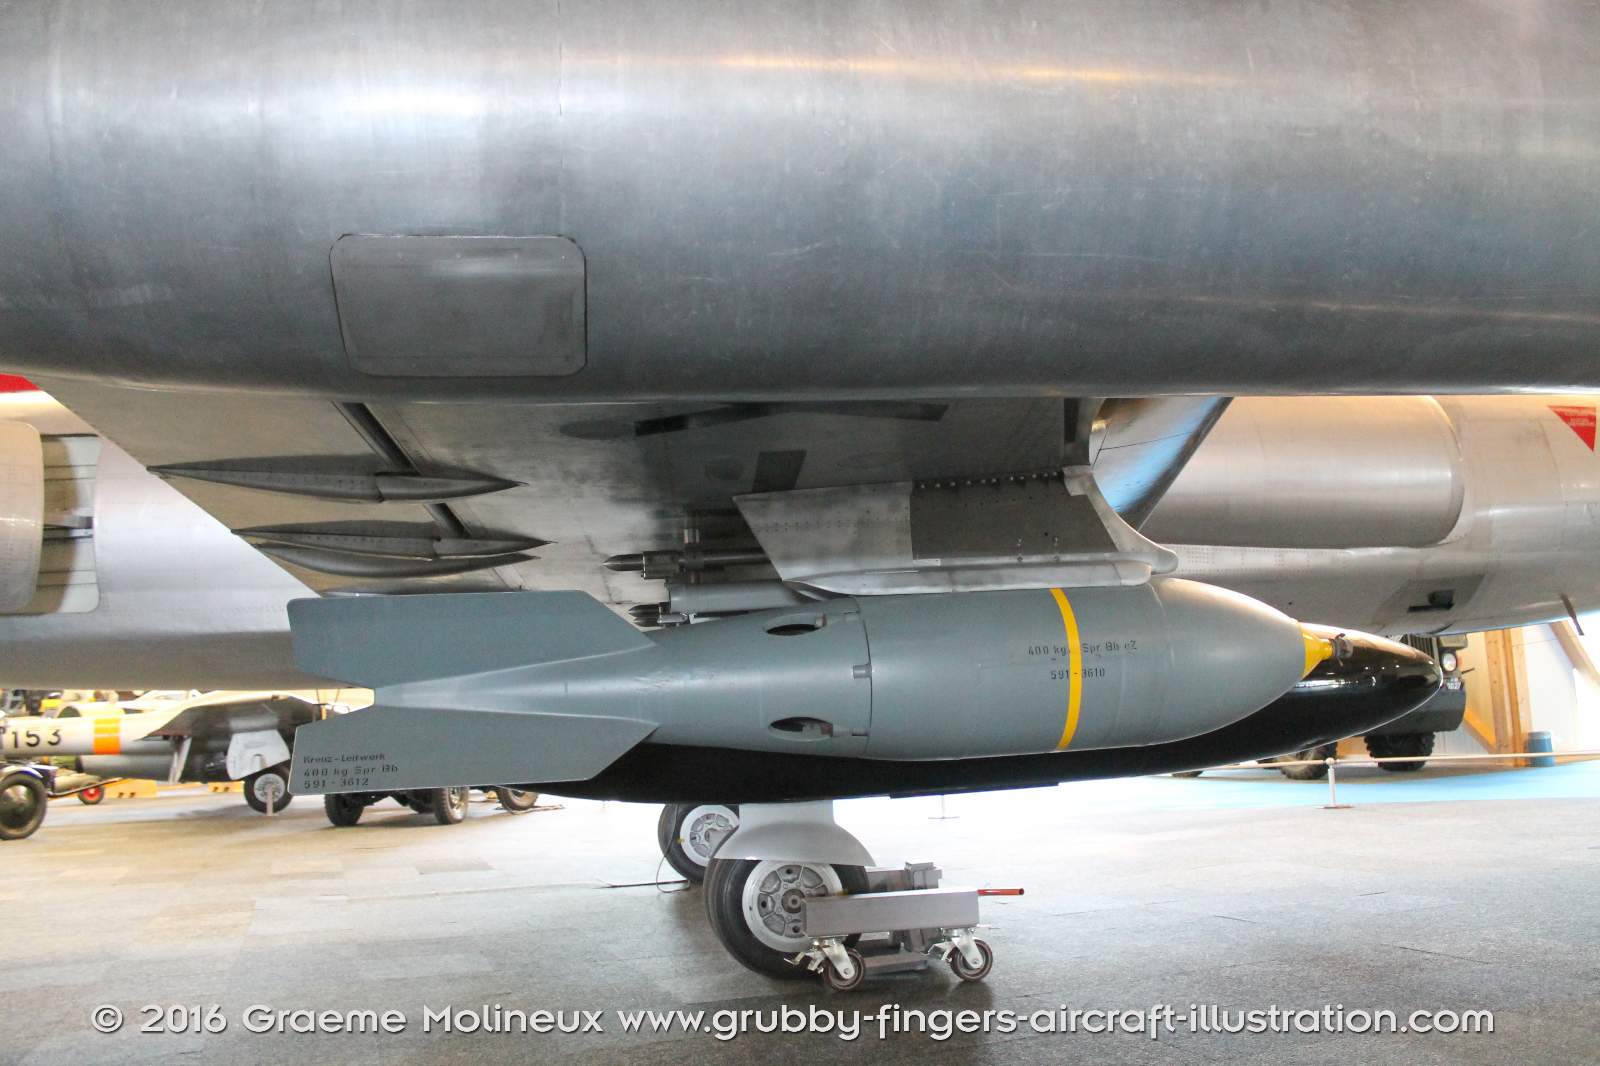 FFA_P-16_X-HB-VAD_Swiss_Air_Force_Museum_2015_21_GrubbyFingers